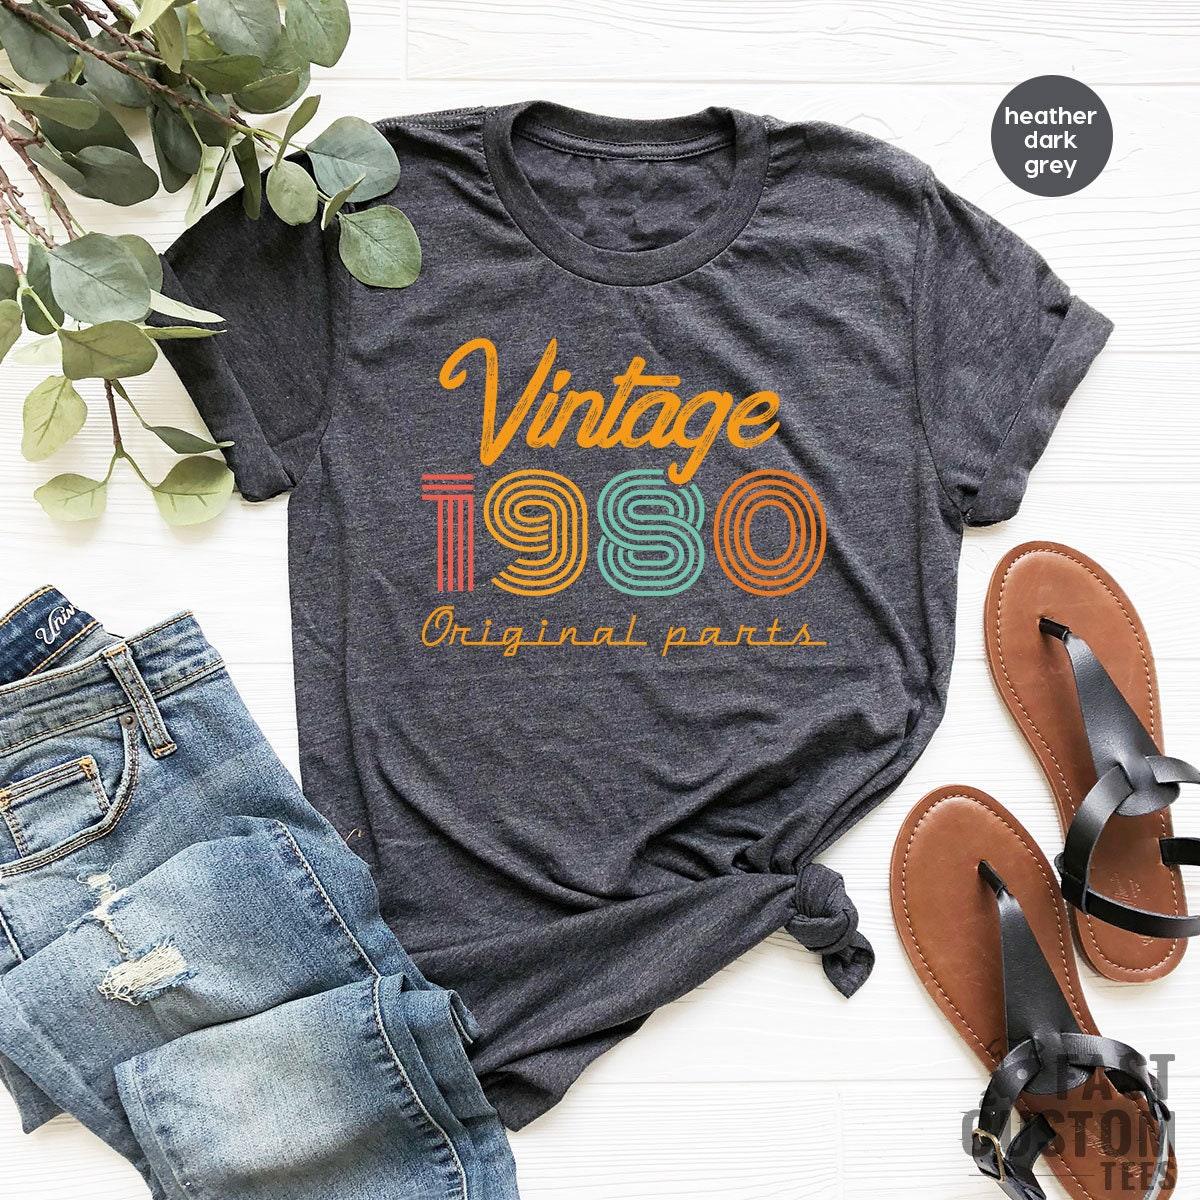 41st Birthday Shirt, Vintage T Shirt, Vintage 1980 Shirt, 41st Birthday Gift For Women, 41st Birthday Shirt Men, Retro Shirt, Vintage Shirts - Fastdeliverytees.com